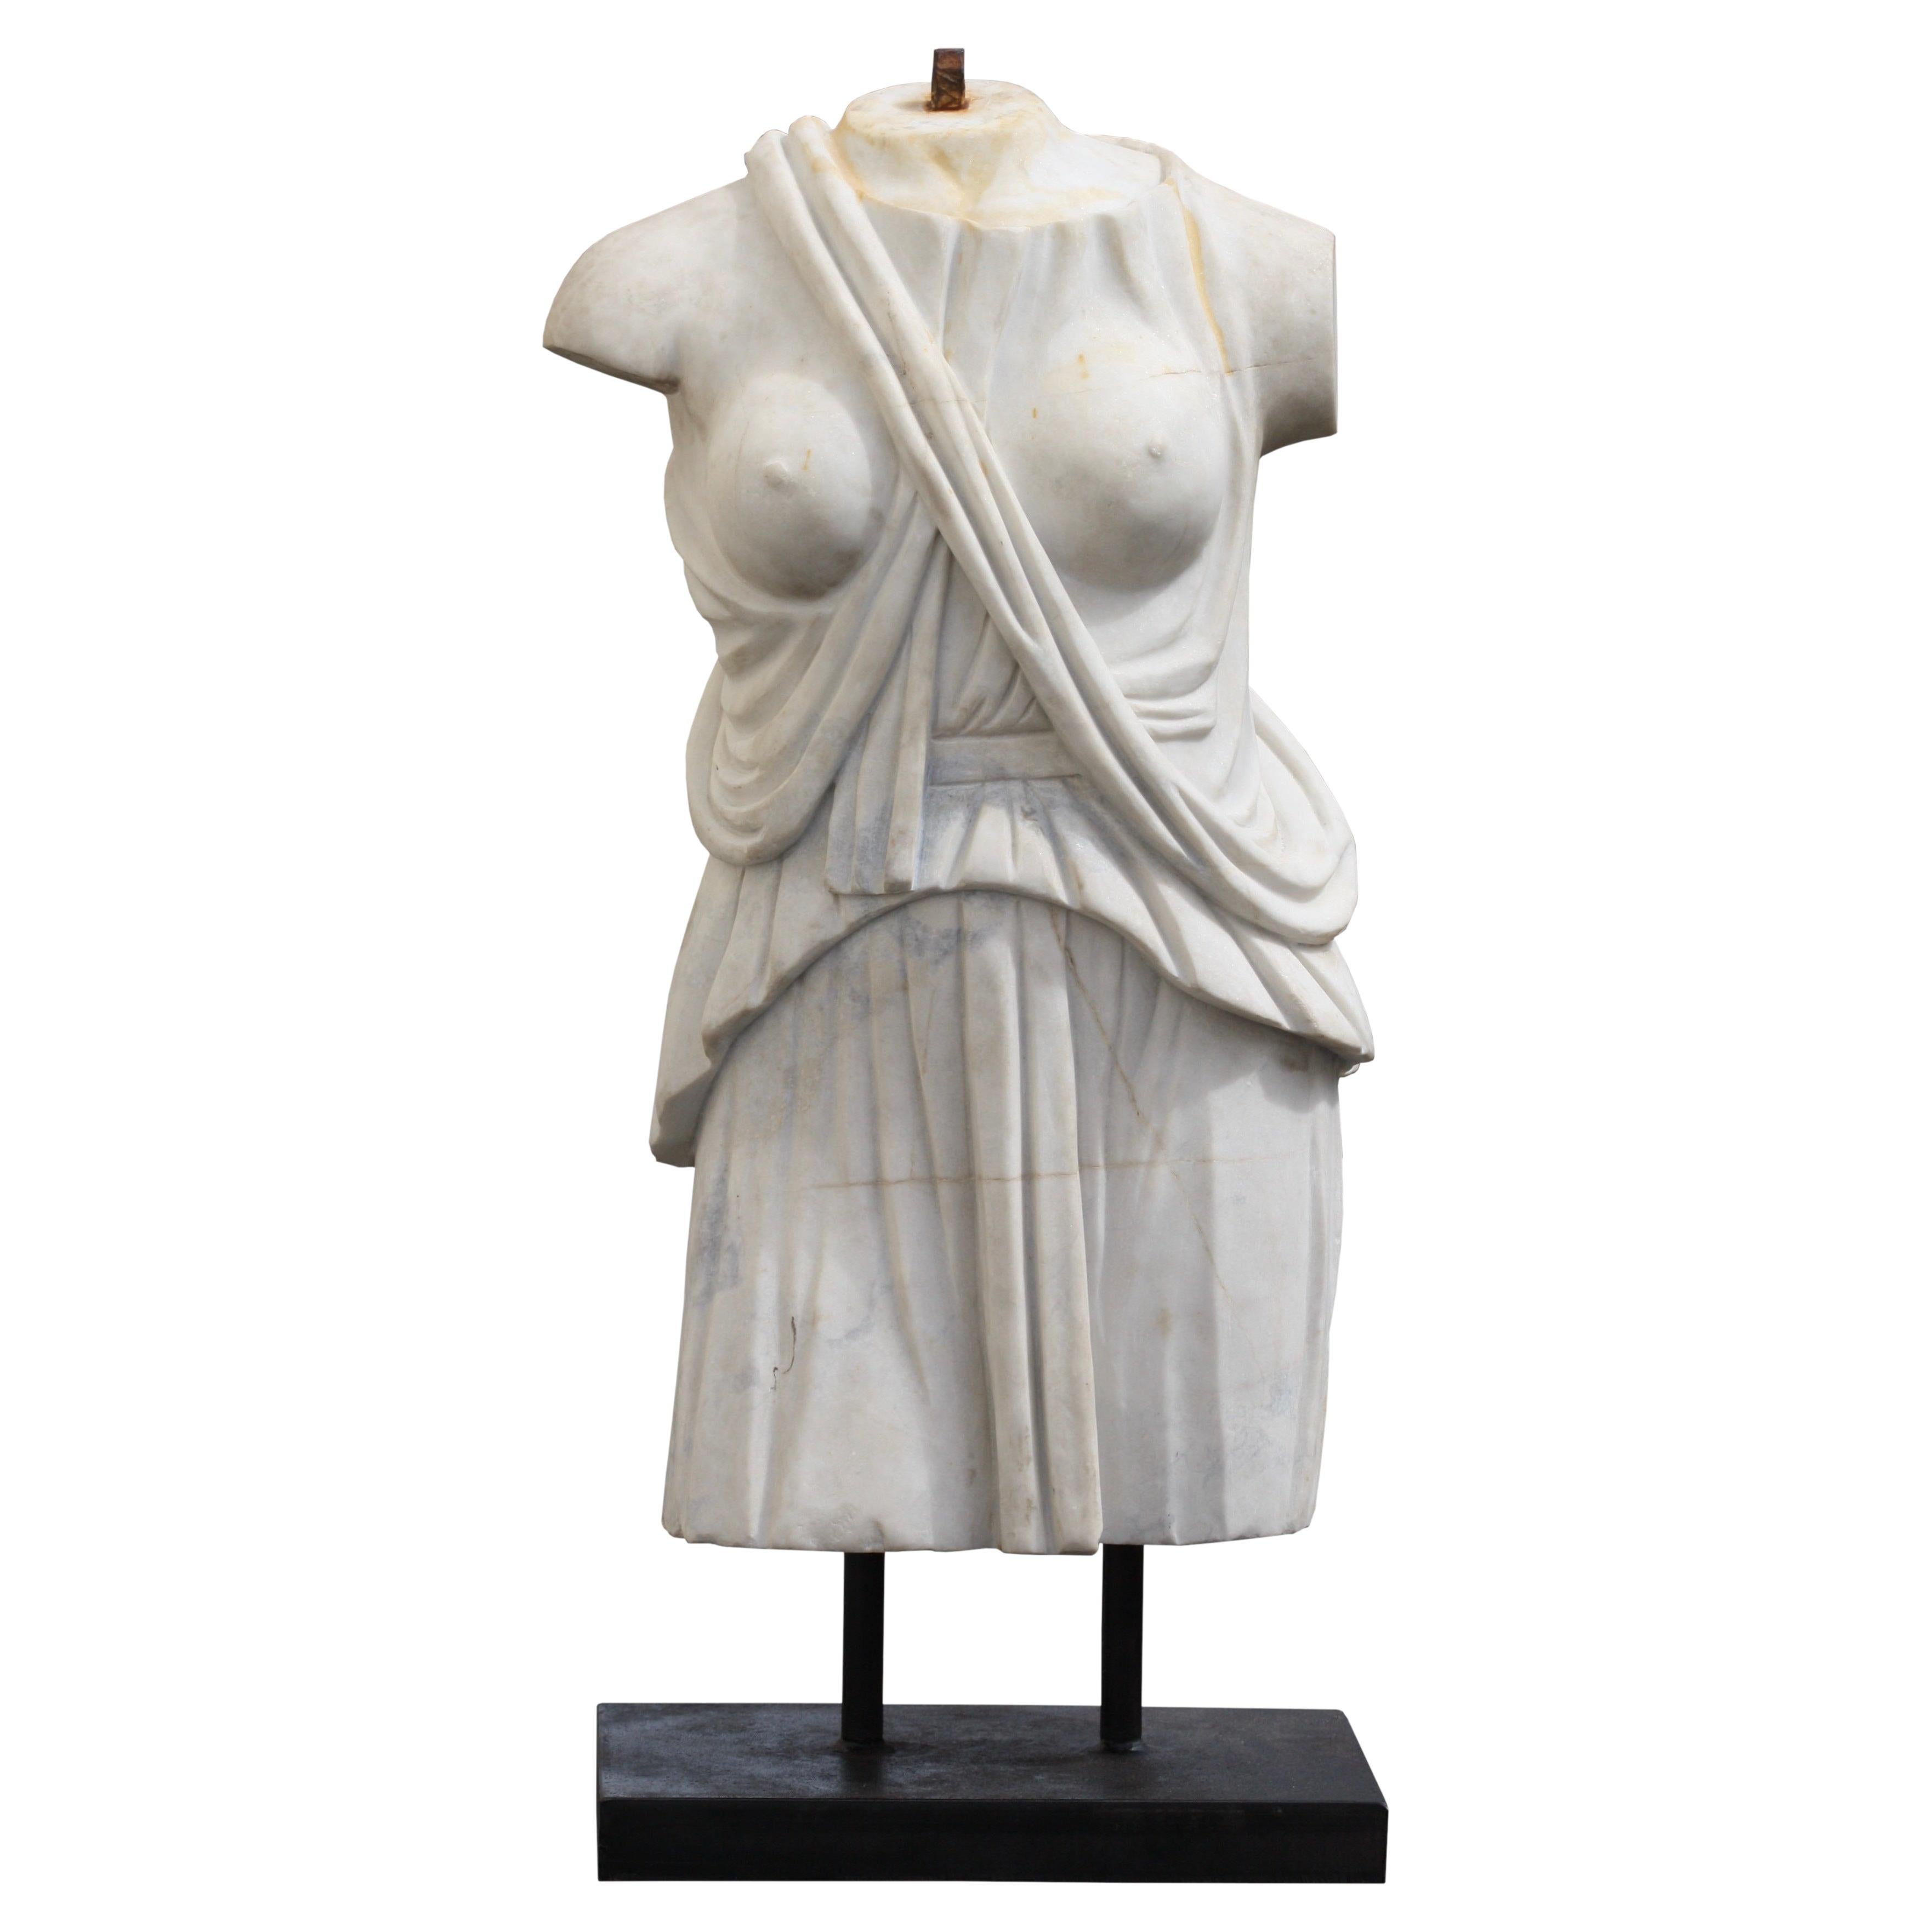 Italian Marble Figure of a Torso, 19th/20th Century For Sale